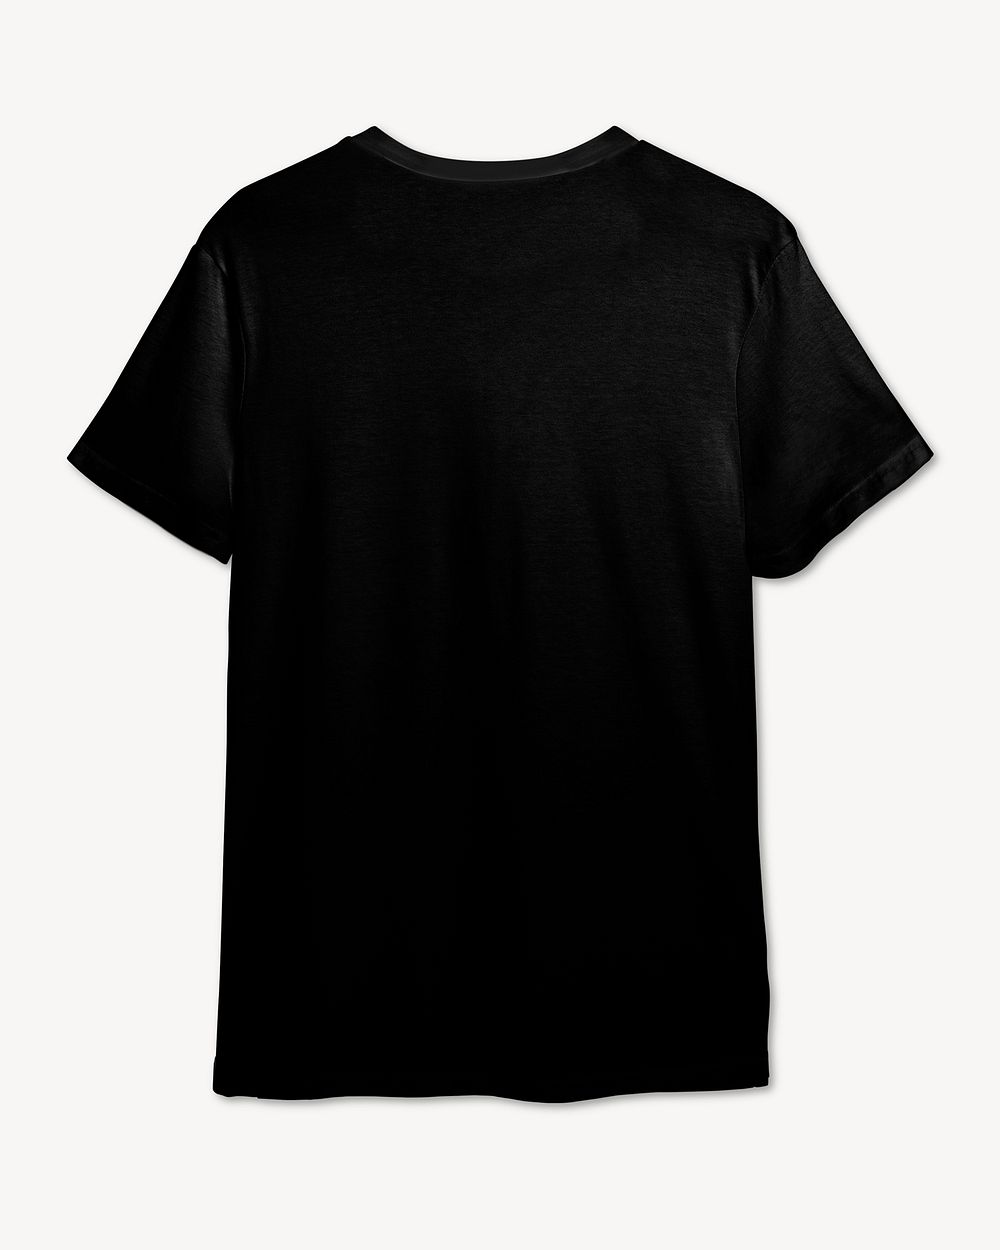 Black t shirt mockup casual apparel Free PSD Mockup rawpixel